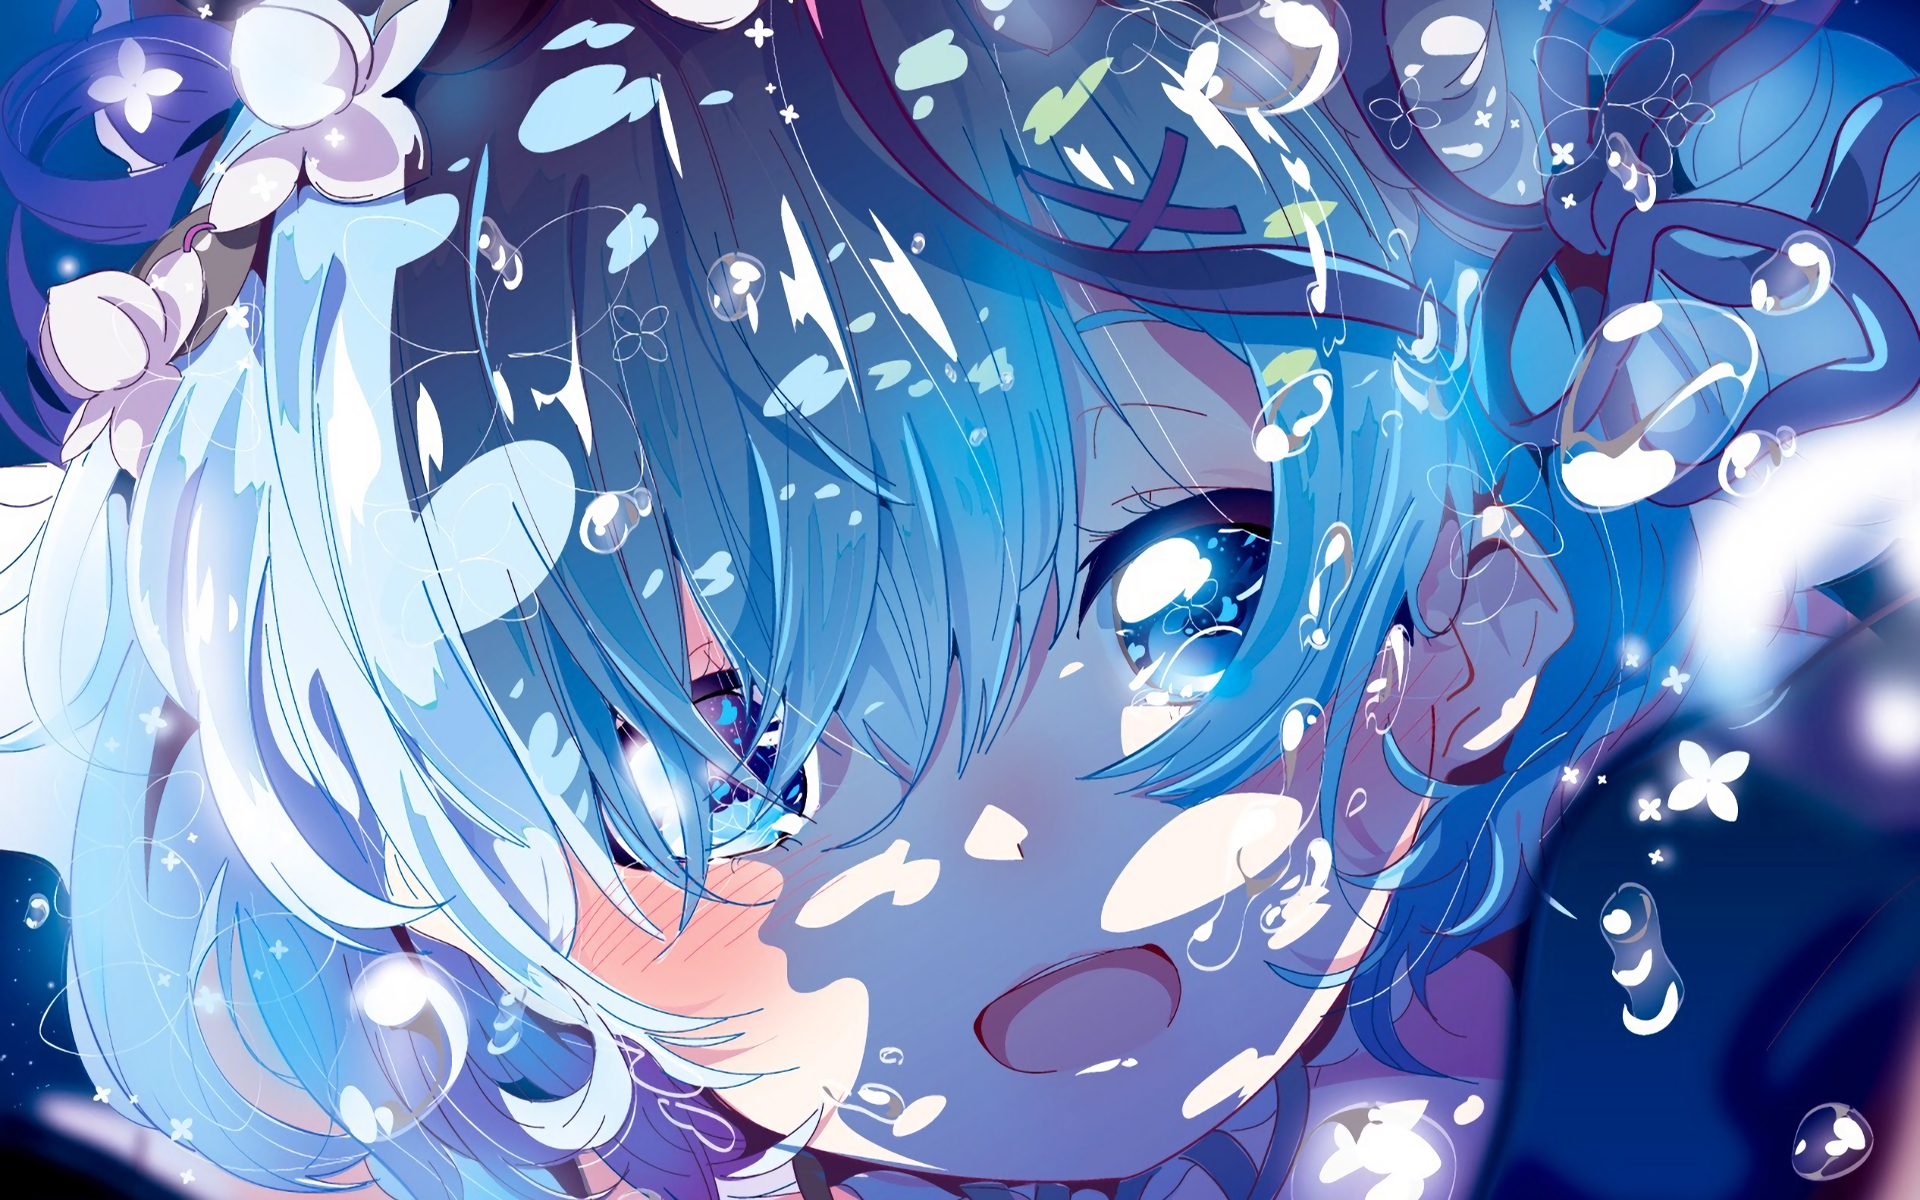 hochauflösende anime wallpaper,blau,anime,wasser,karikatur,cg kunstwerk